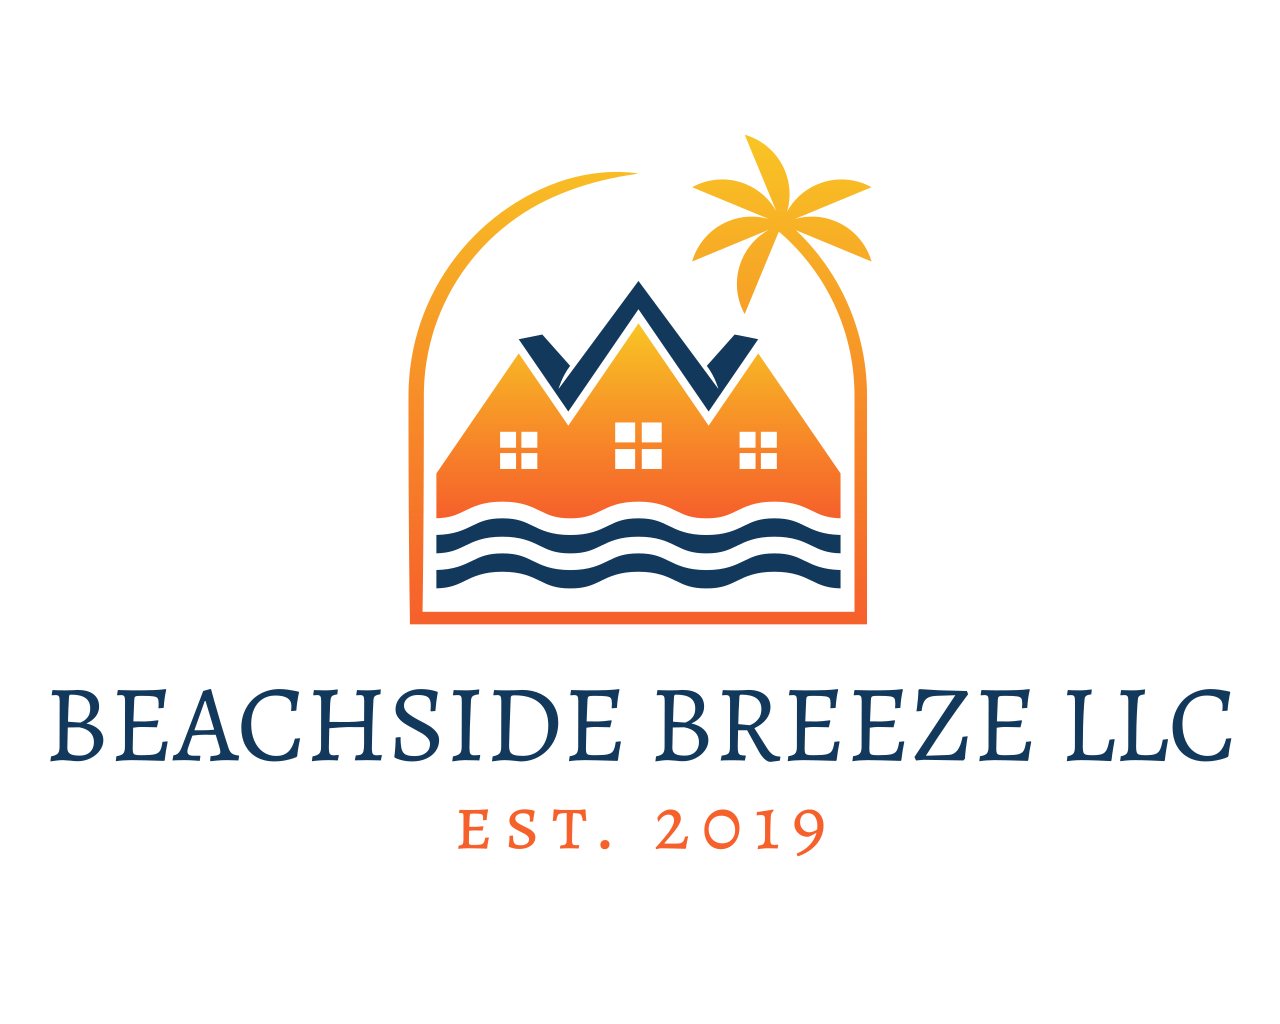 BEACHSIDE BREEZE LLC's web page